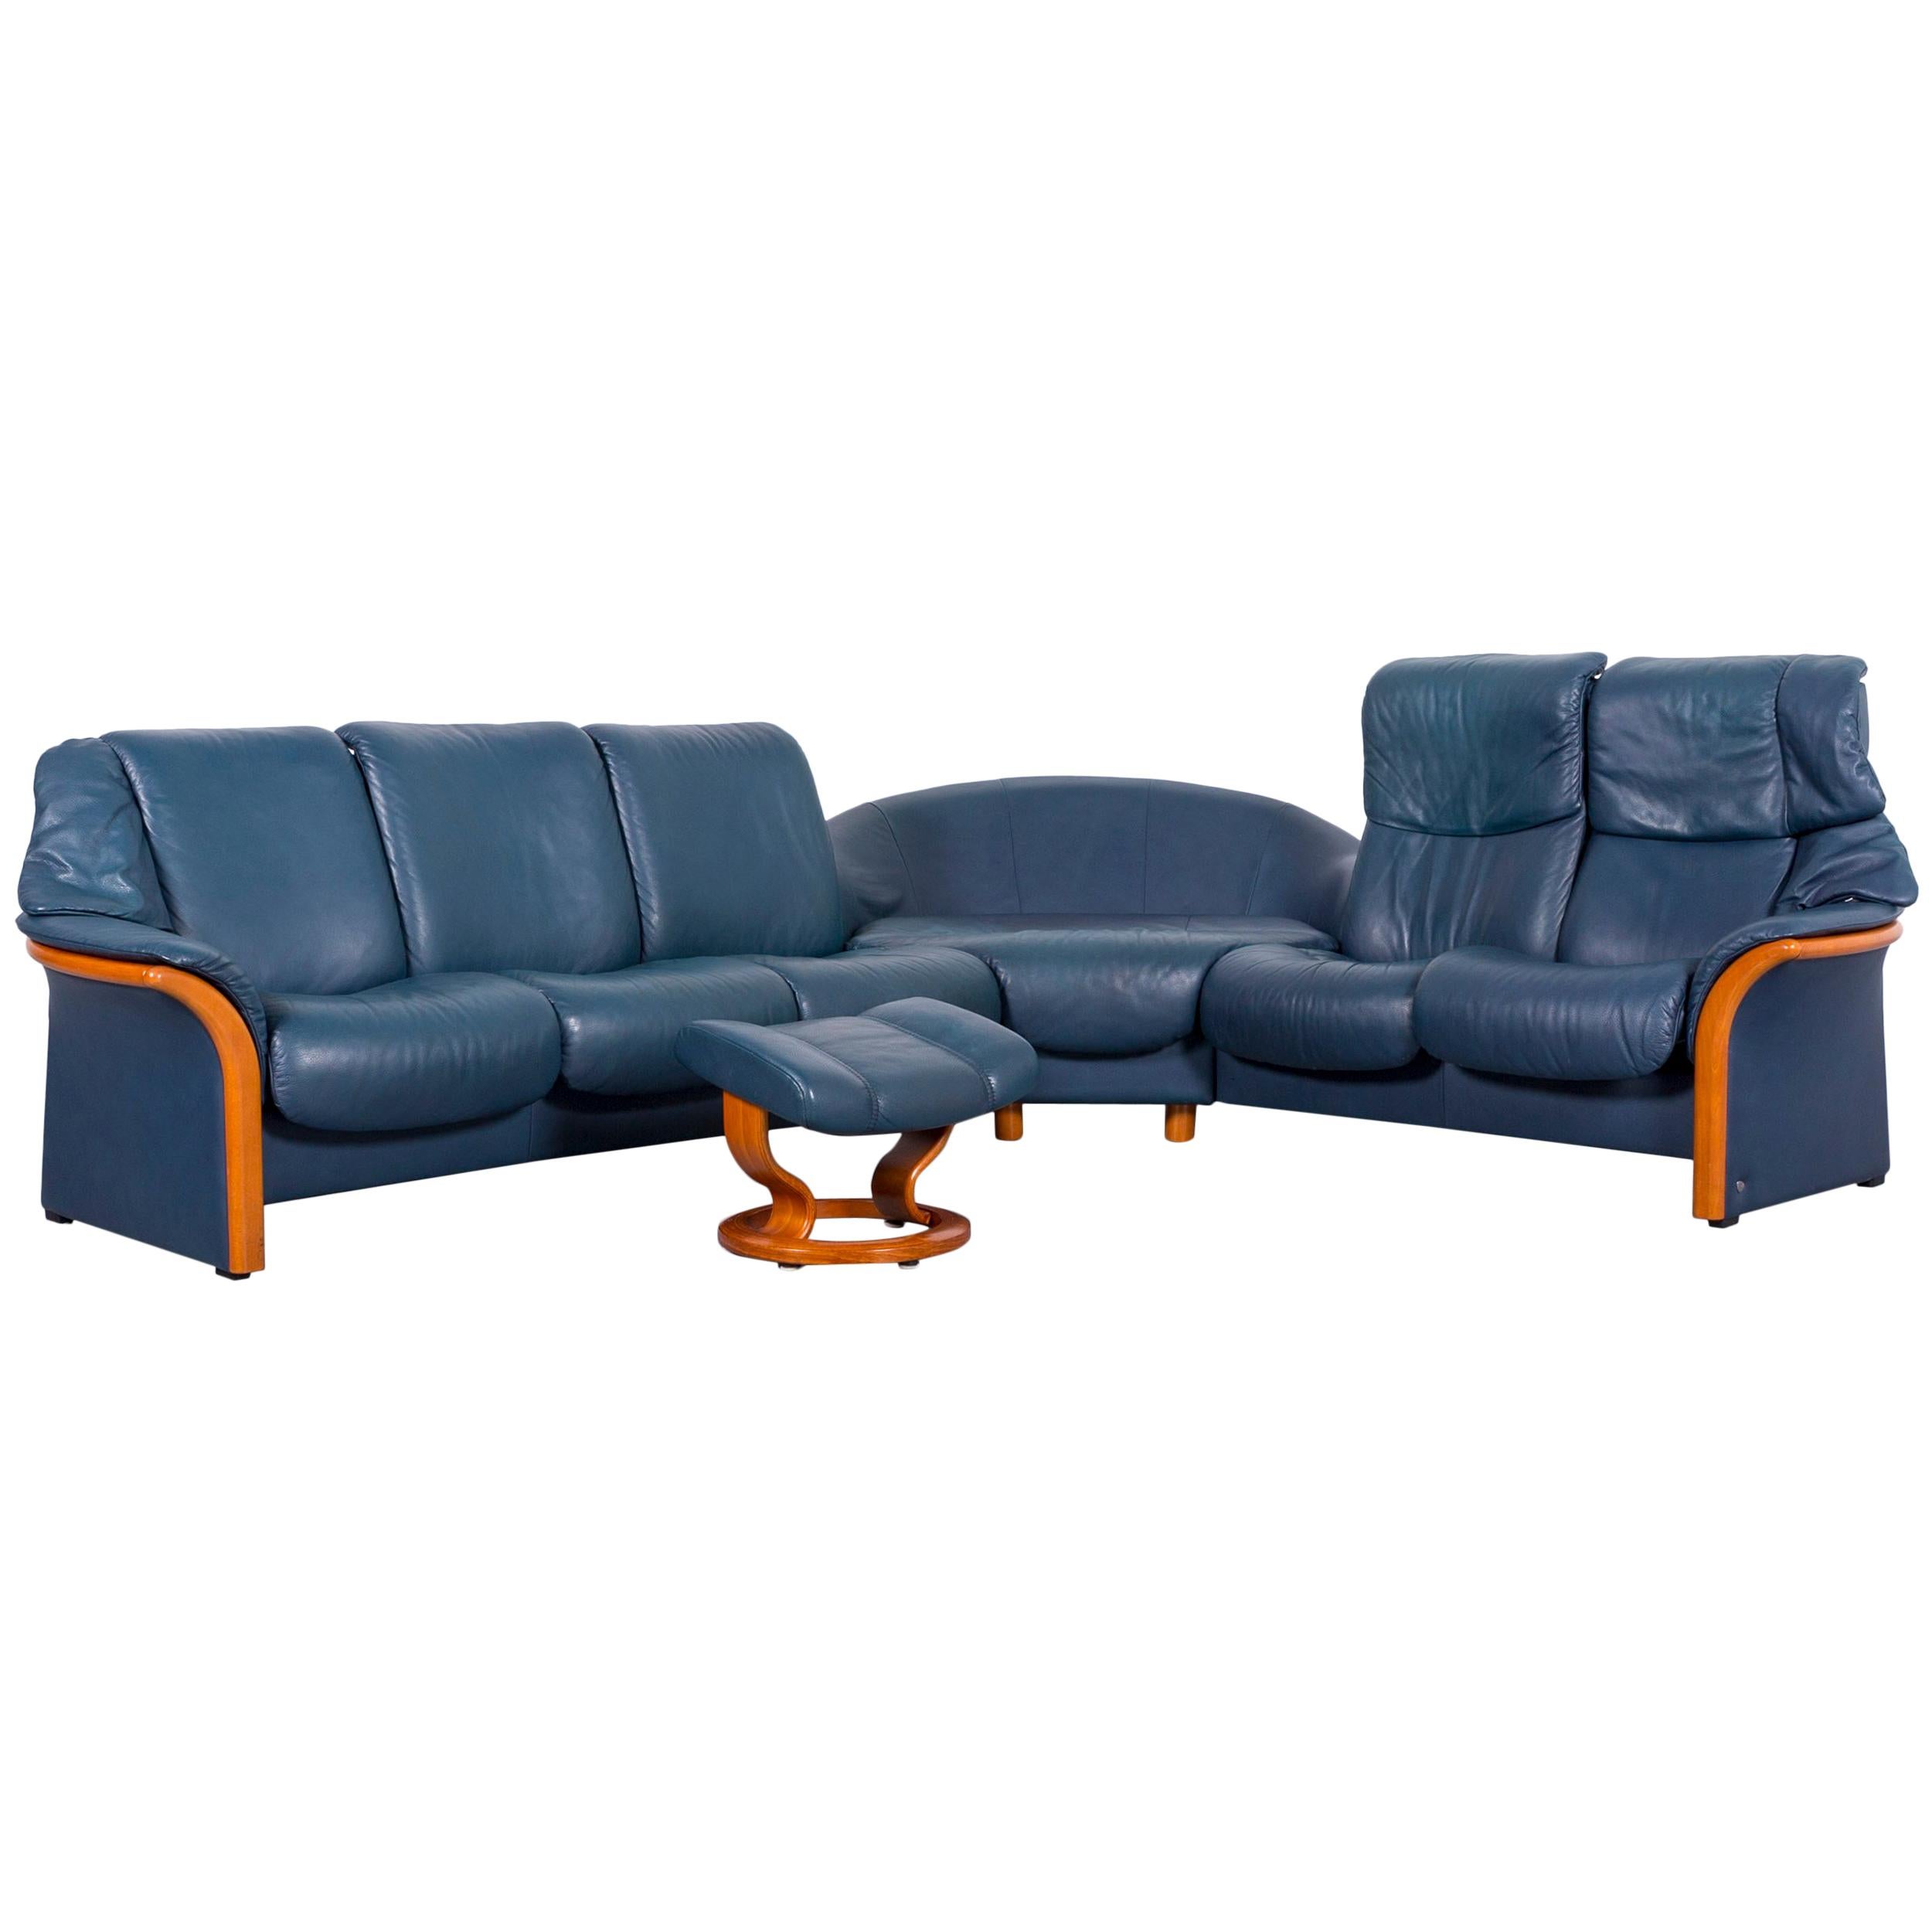 Ekornes Stressless Leather Corner Sofa Blue and Foot-Stool